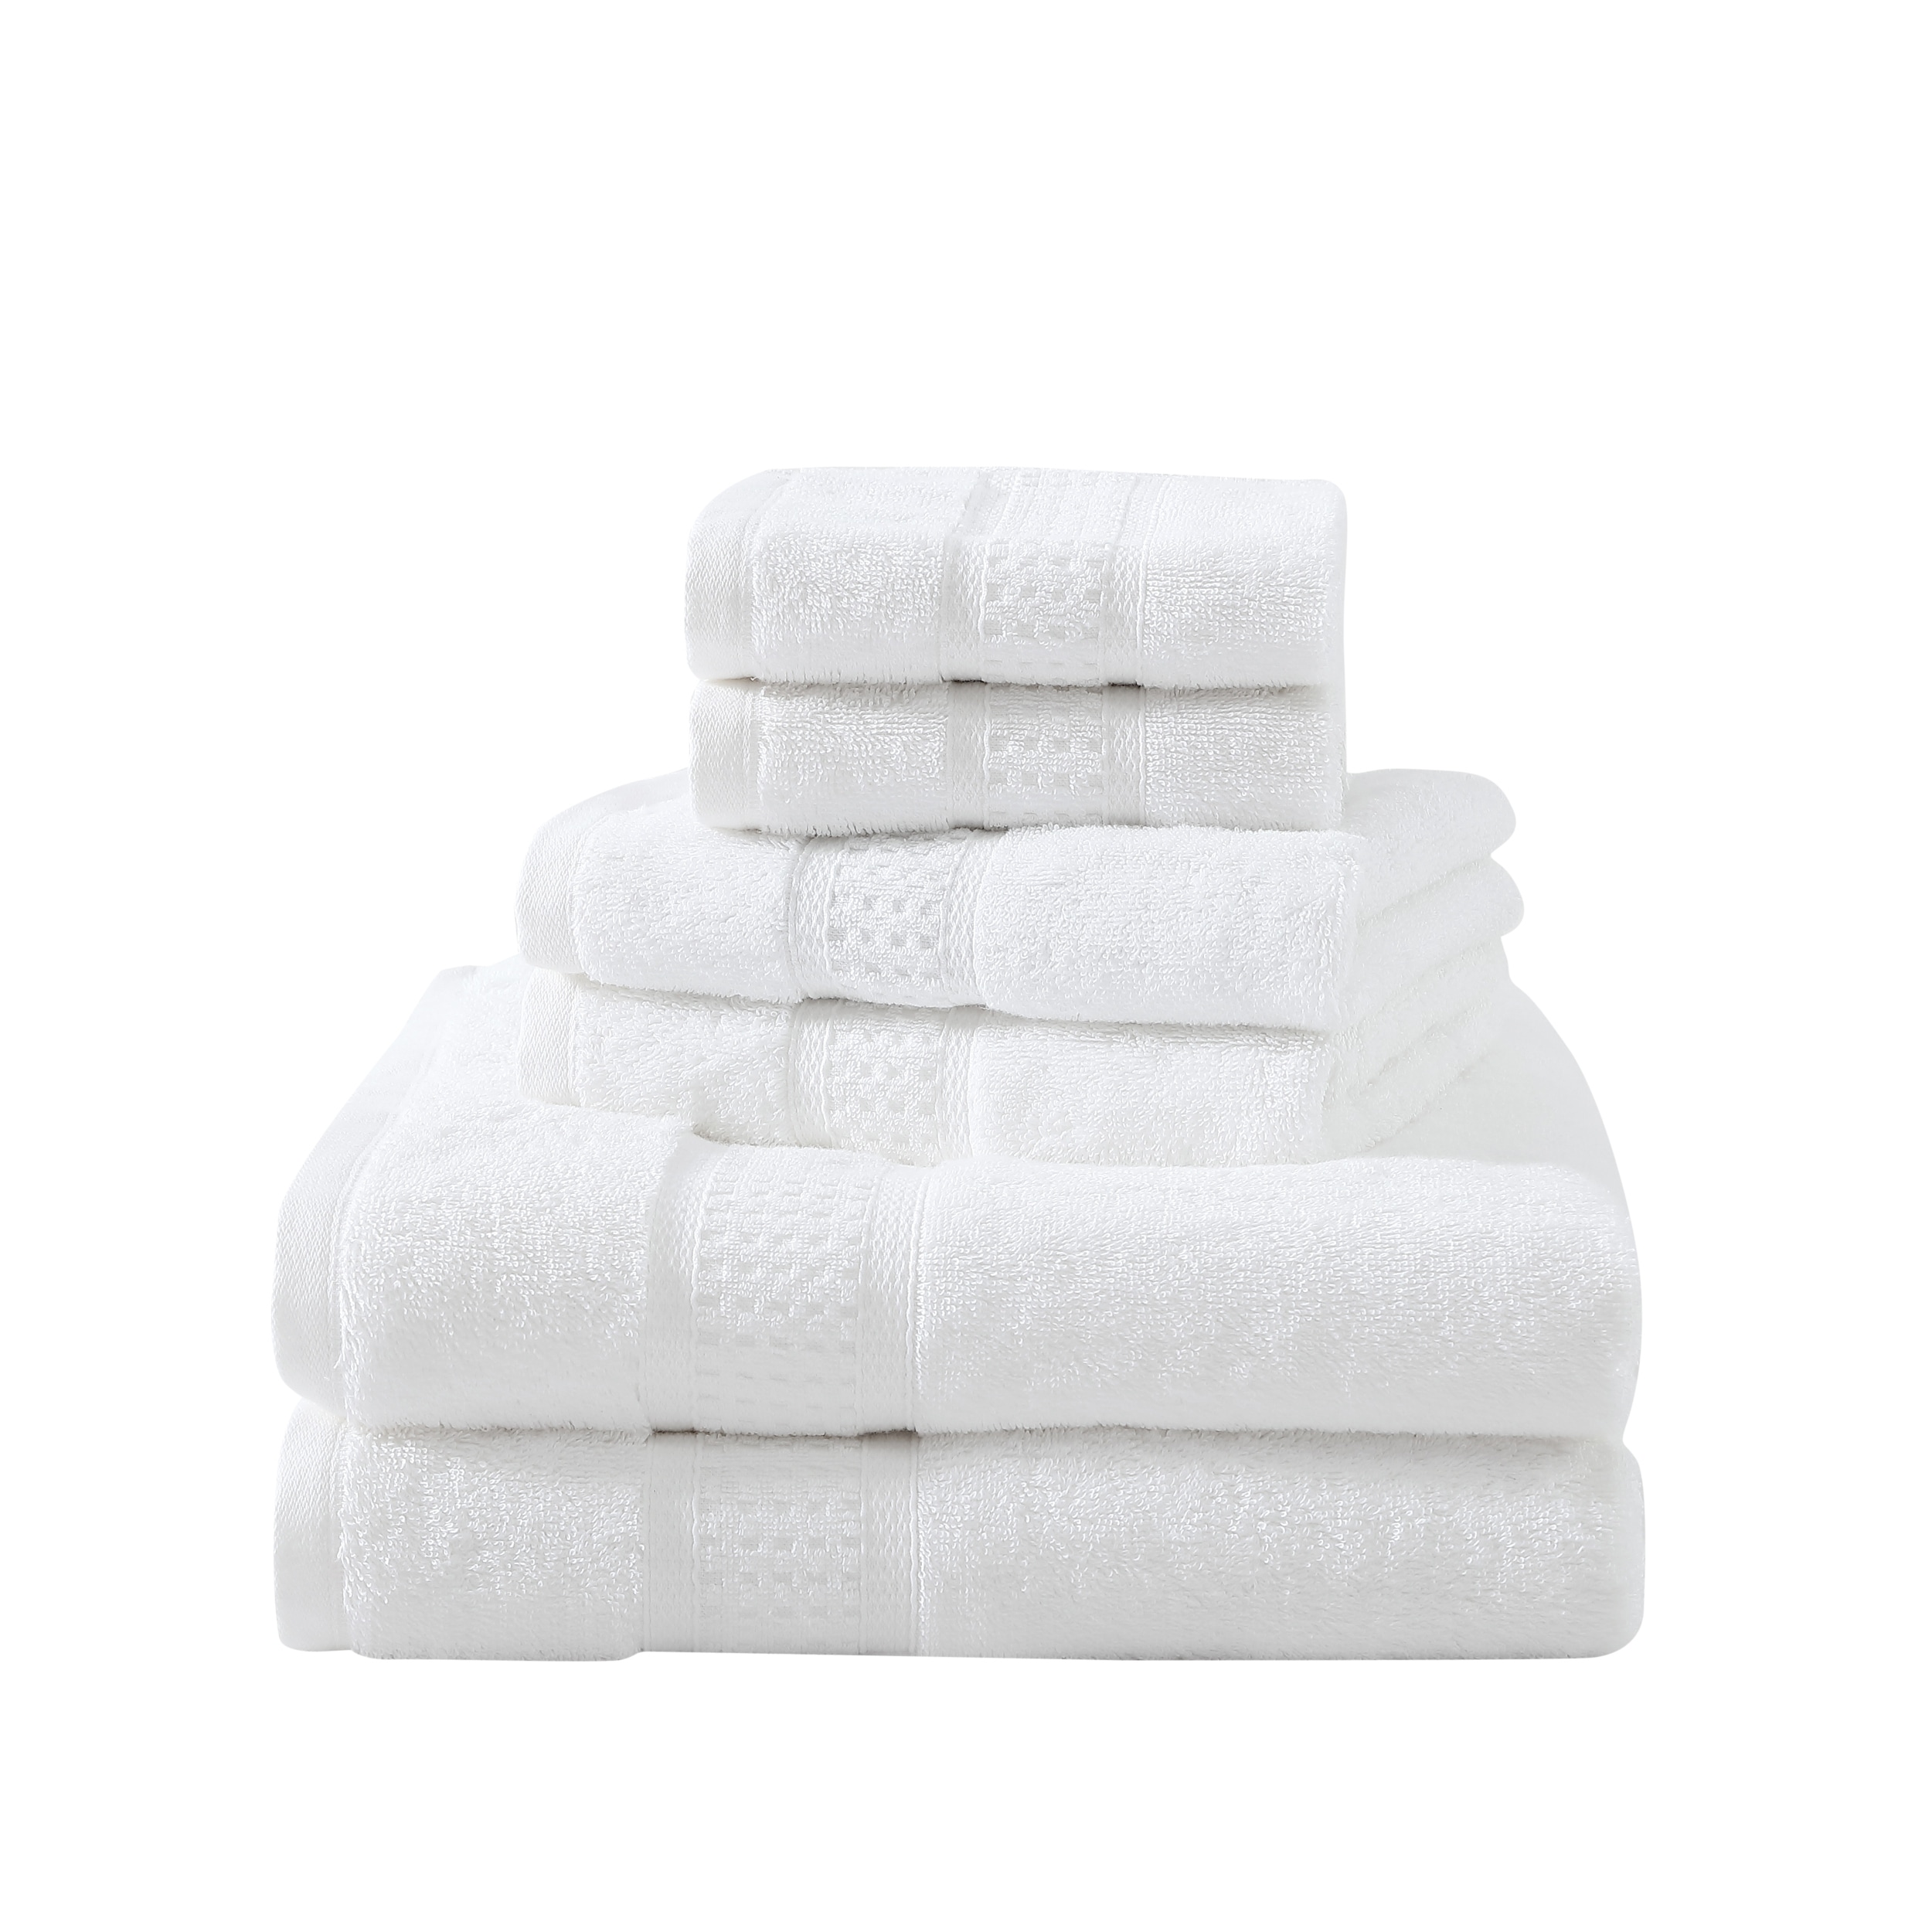 https://ak1.ostkcdn.com/images/products/is/images/direct/959f7d35cab275b51eba8bad37dbcfec3ac18fc1/Nautica-Oceane-Solid-Cotton-6-Piece-Towel-Set.jpg